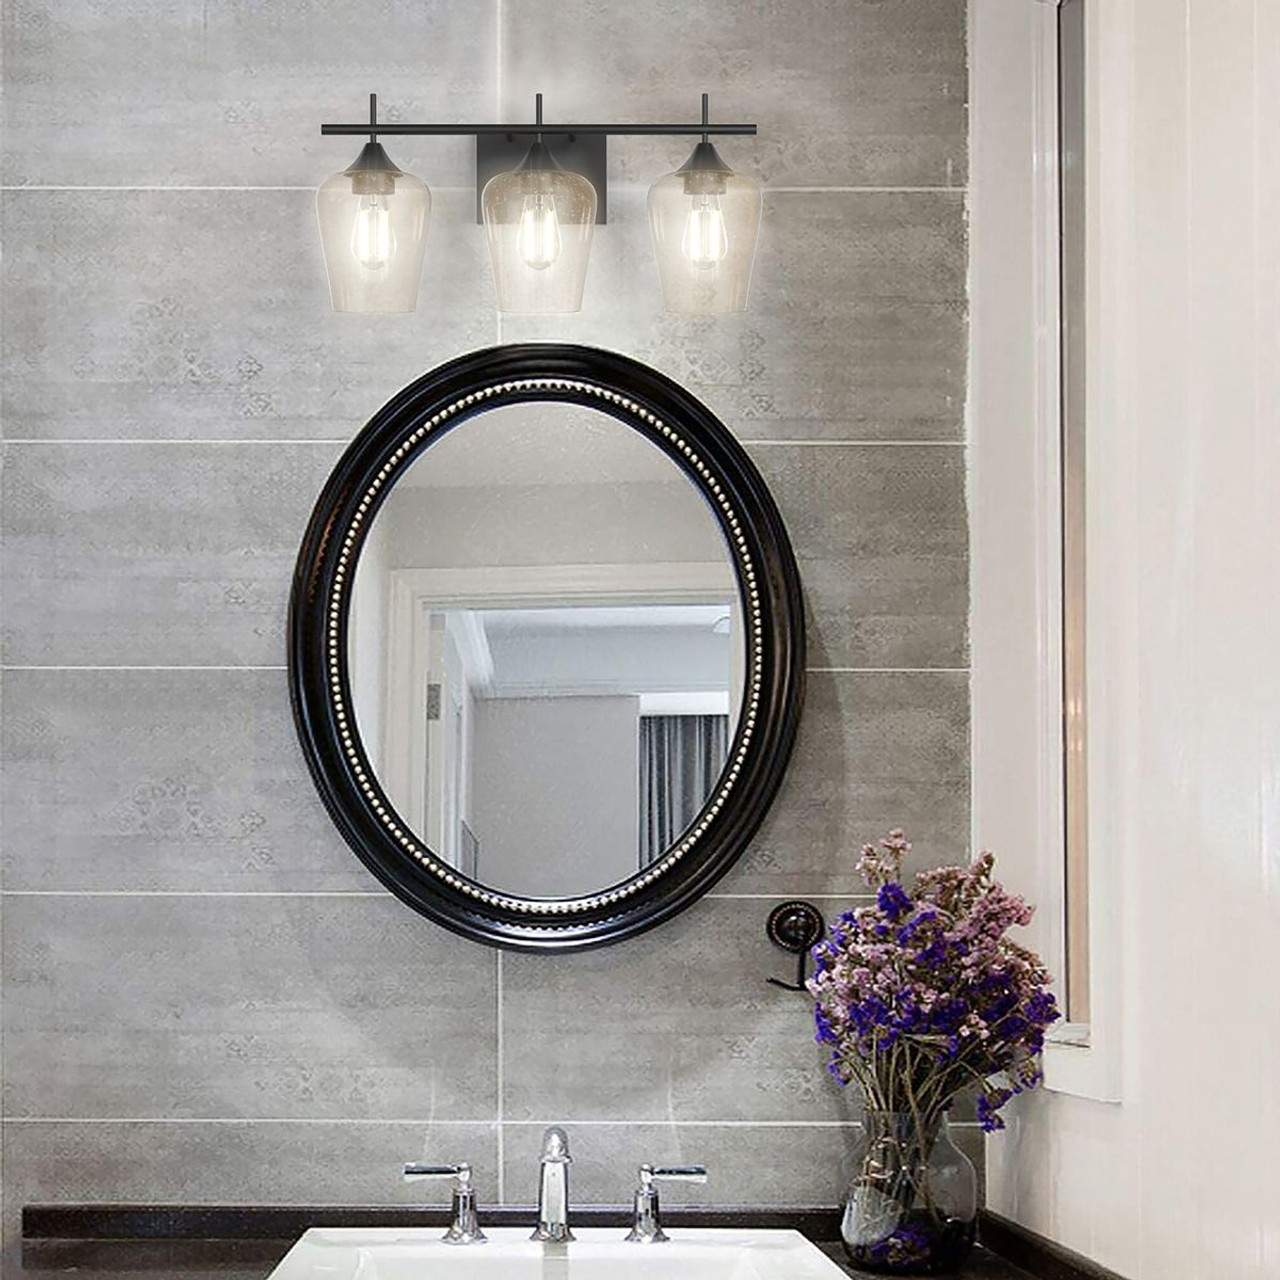 3-Light Wall Sconce Modern Bathroom Vanity Light Fixture product image